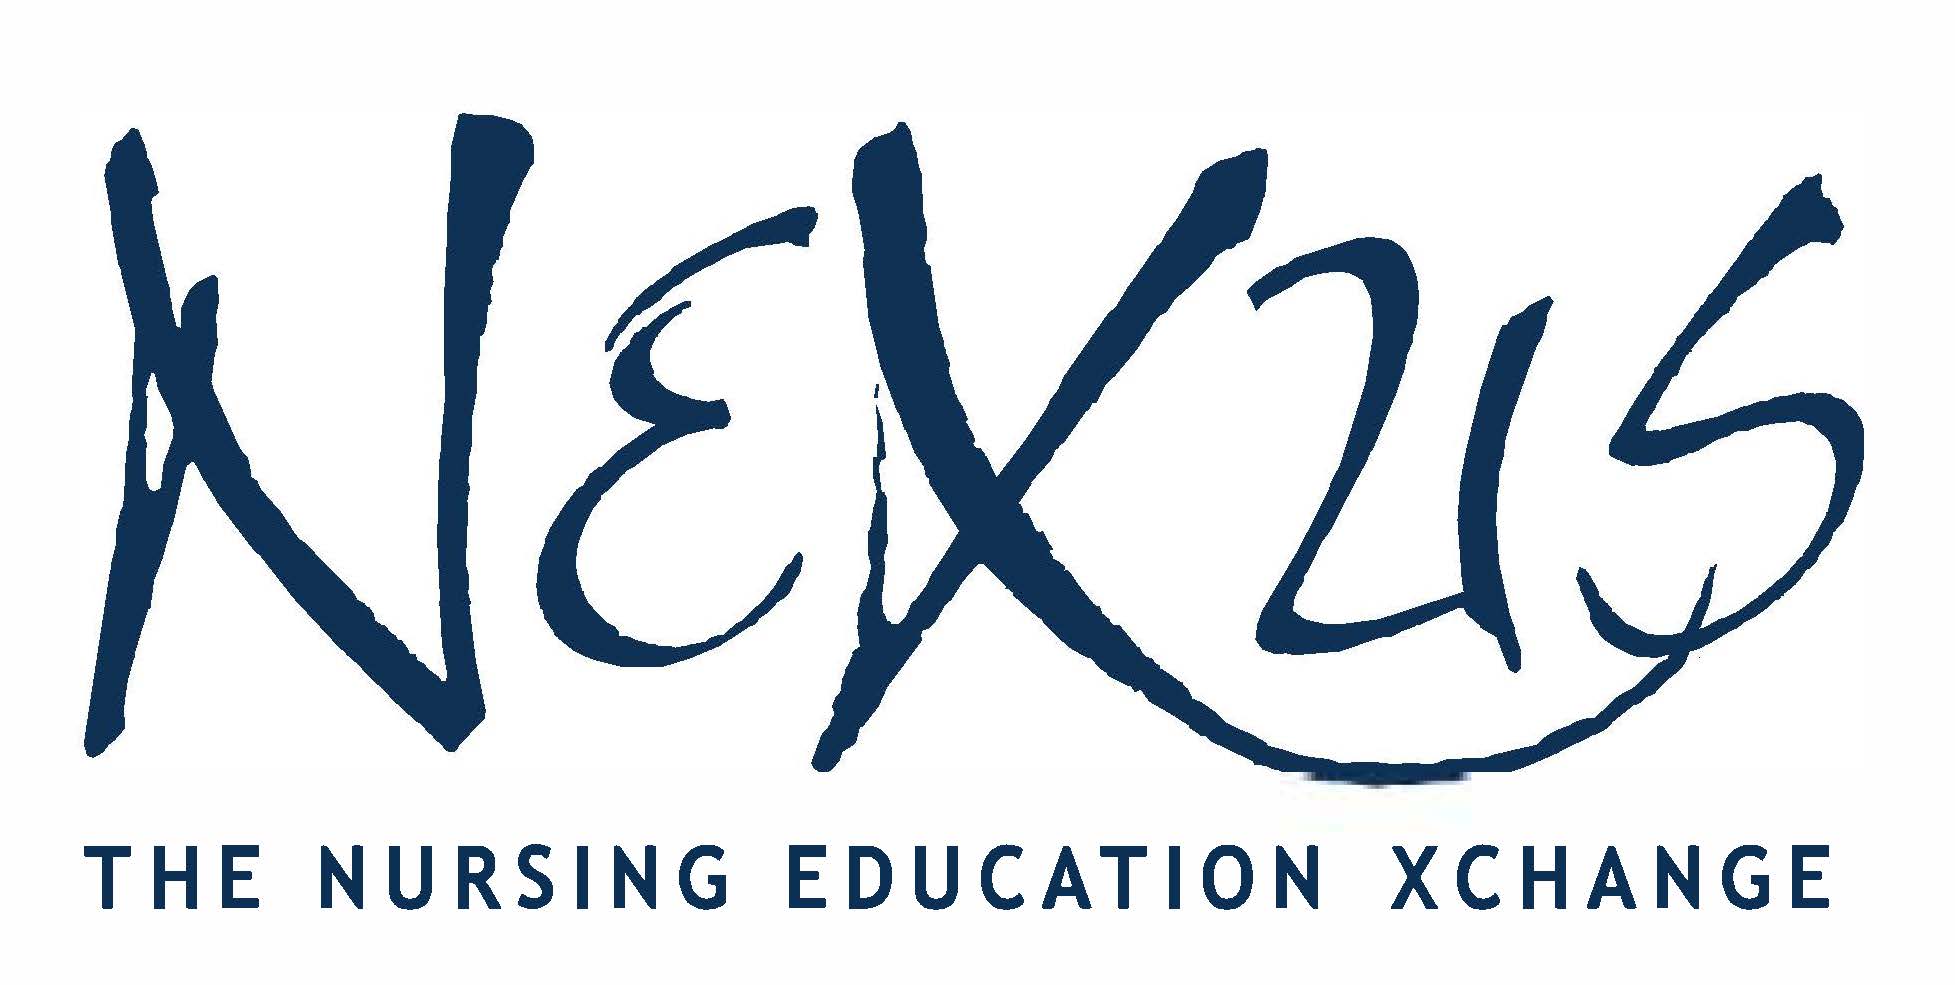 Nexus logo 100.83.40.35.eps